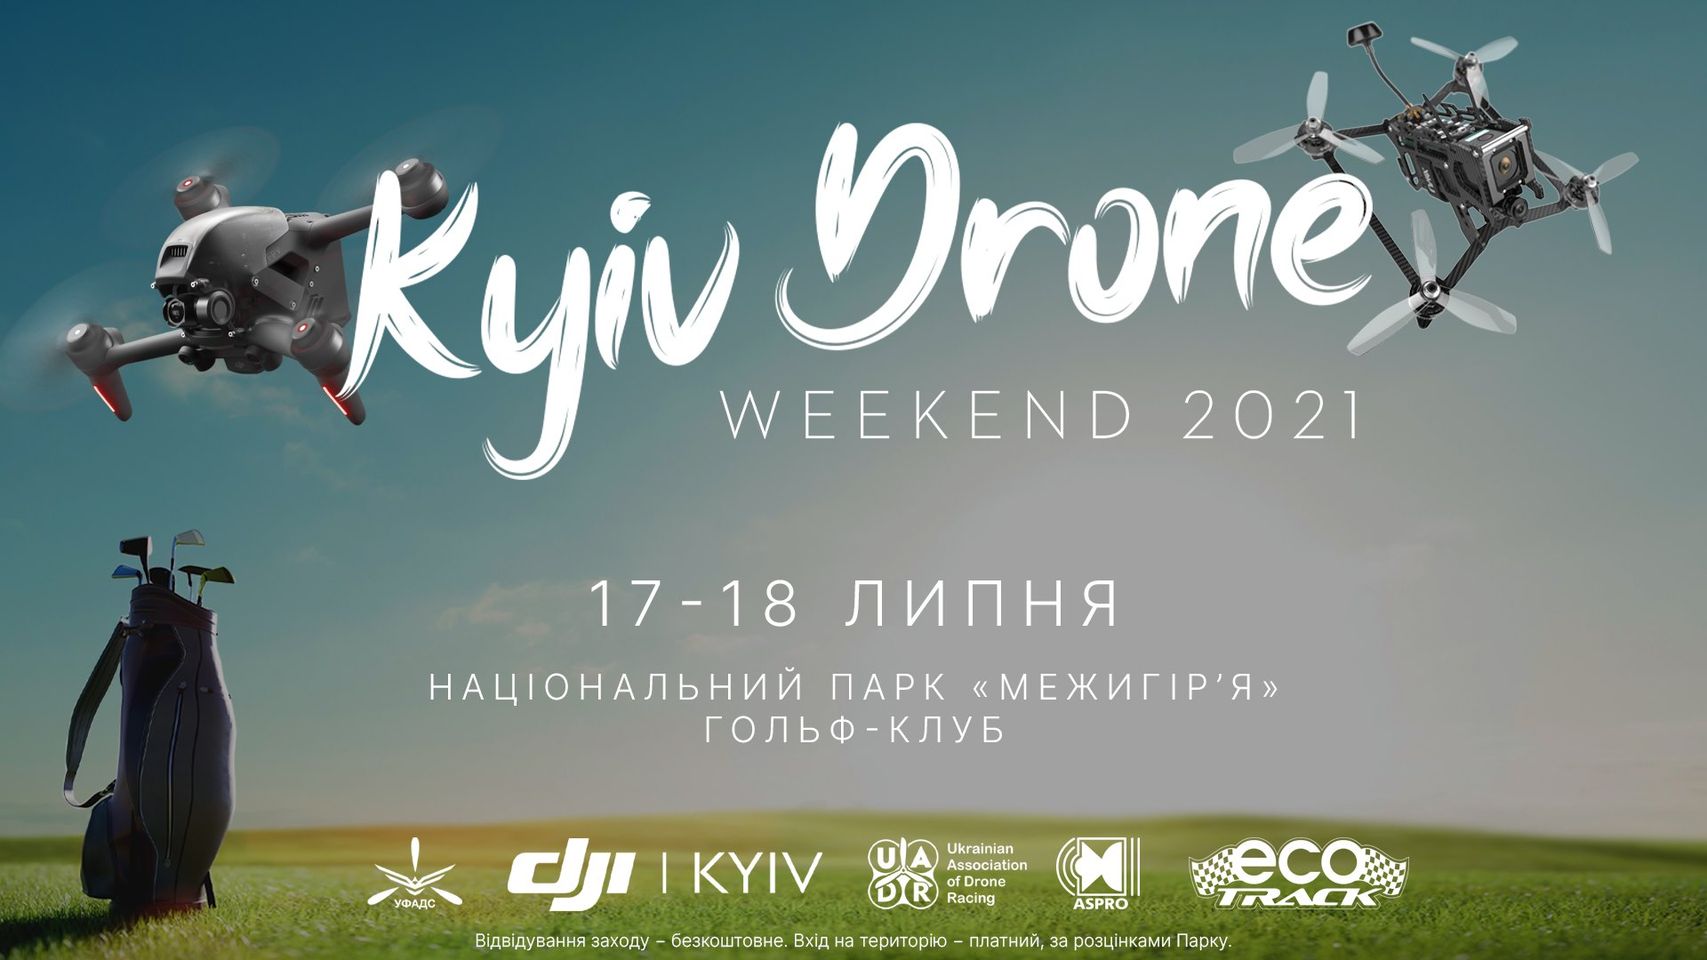 Kyiv Drone Weekend 2021